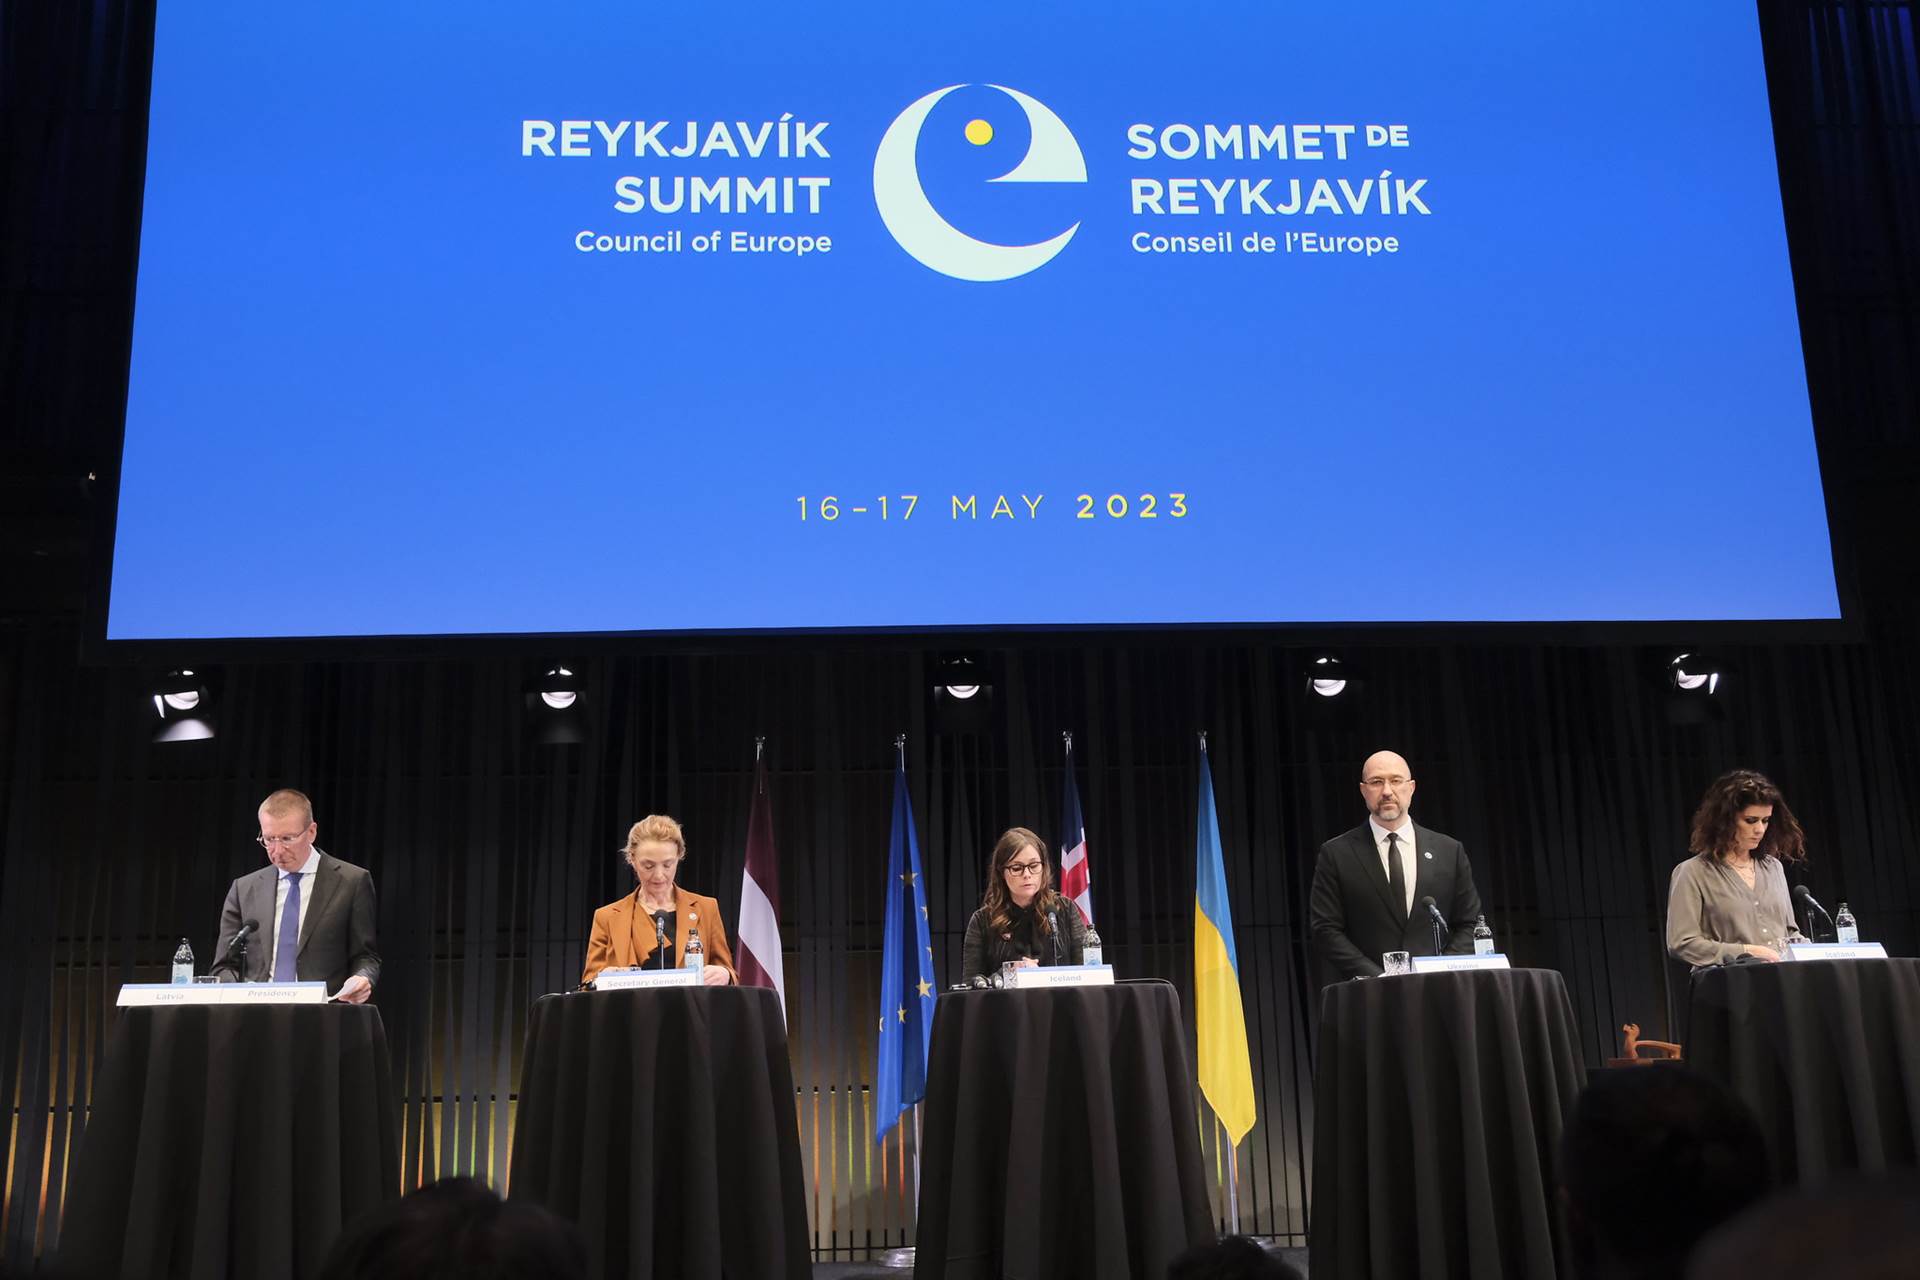 Accountability for Ukraine and democracy top agenda of the Reykjavík Summit  ​ - mynd